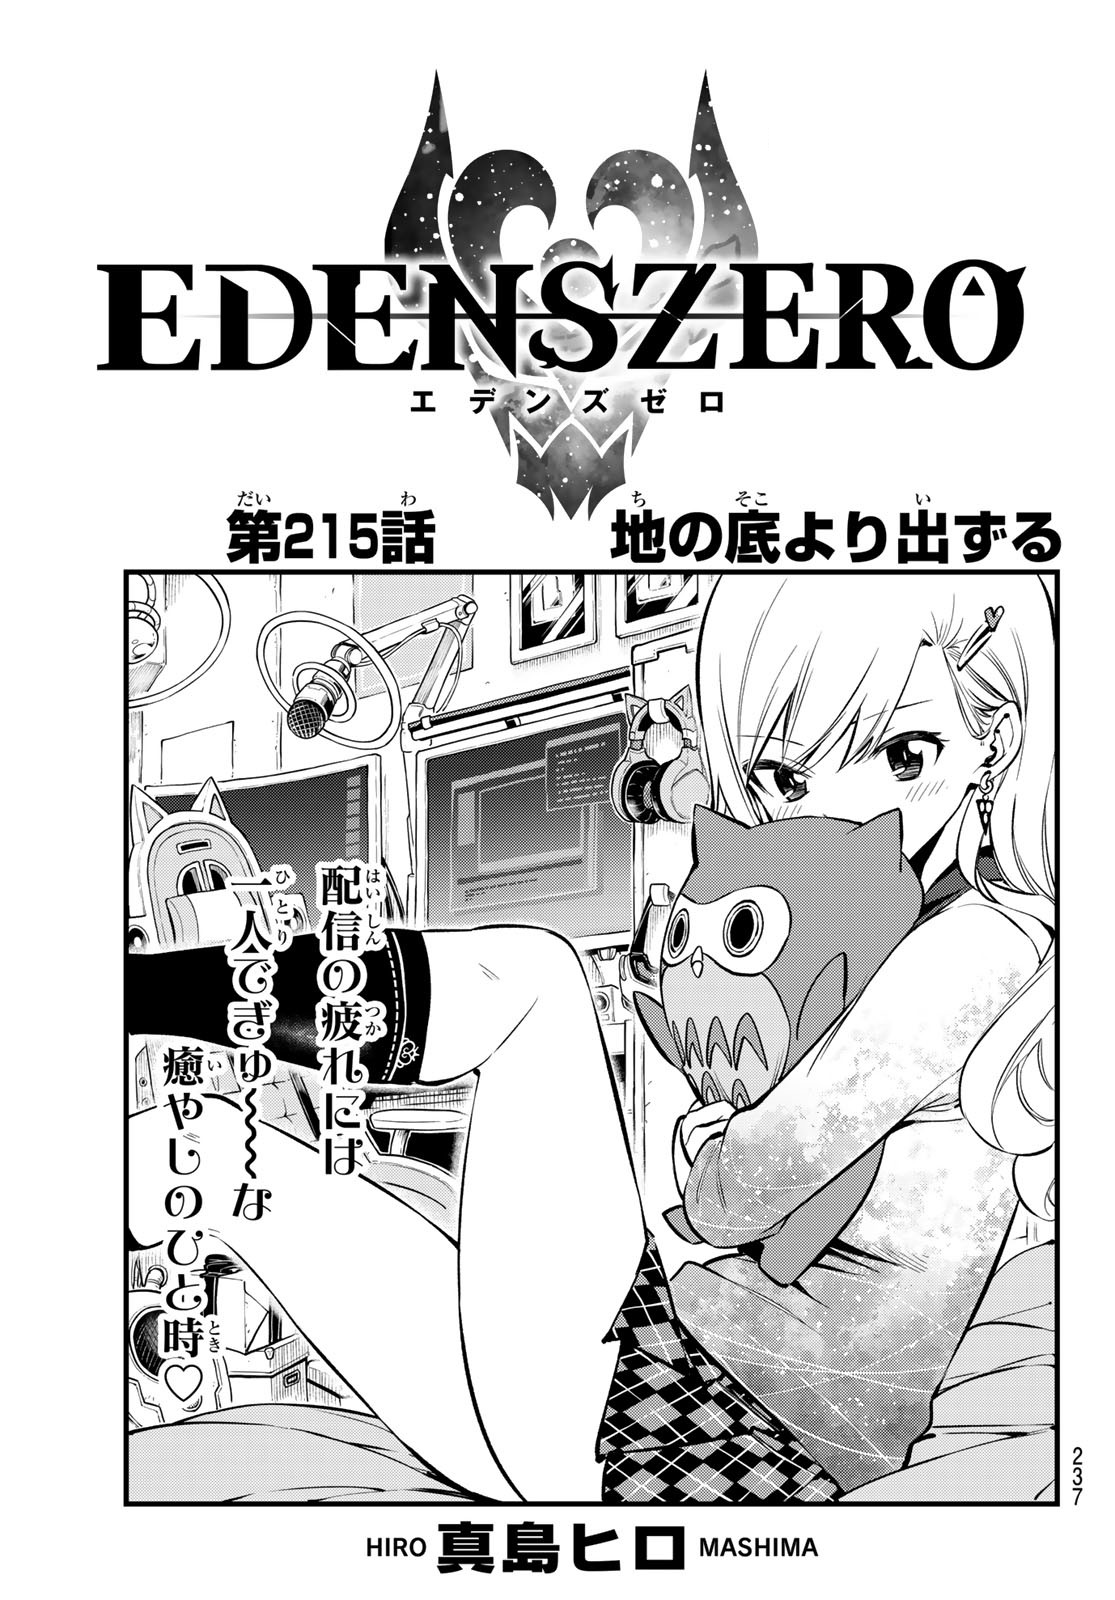 Eden Zero Volume 25 Cover : r/EdensZero